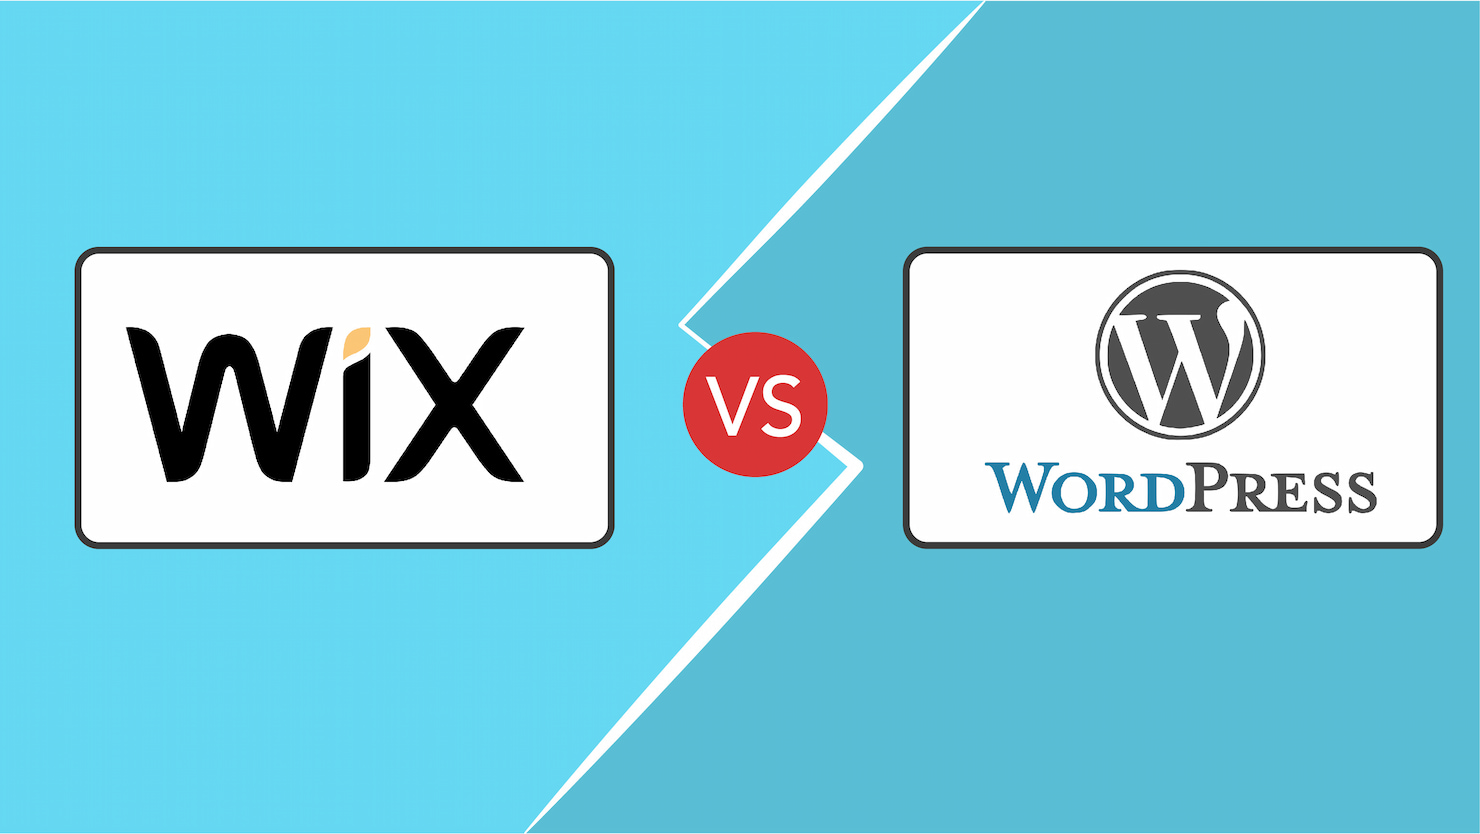 Wix Vs WordPress with lightening bolt graphic